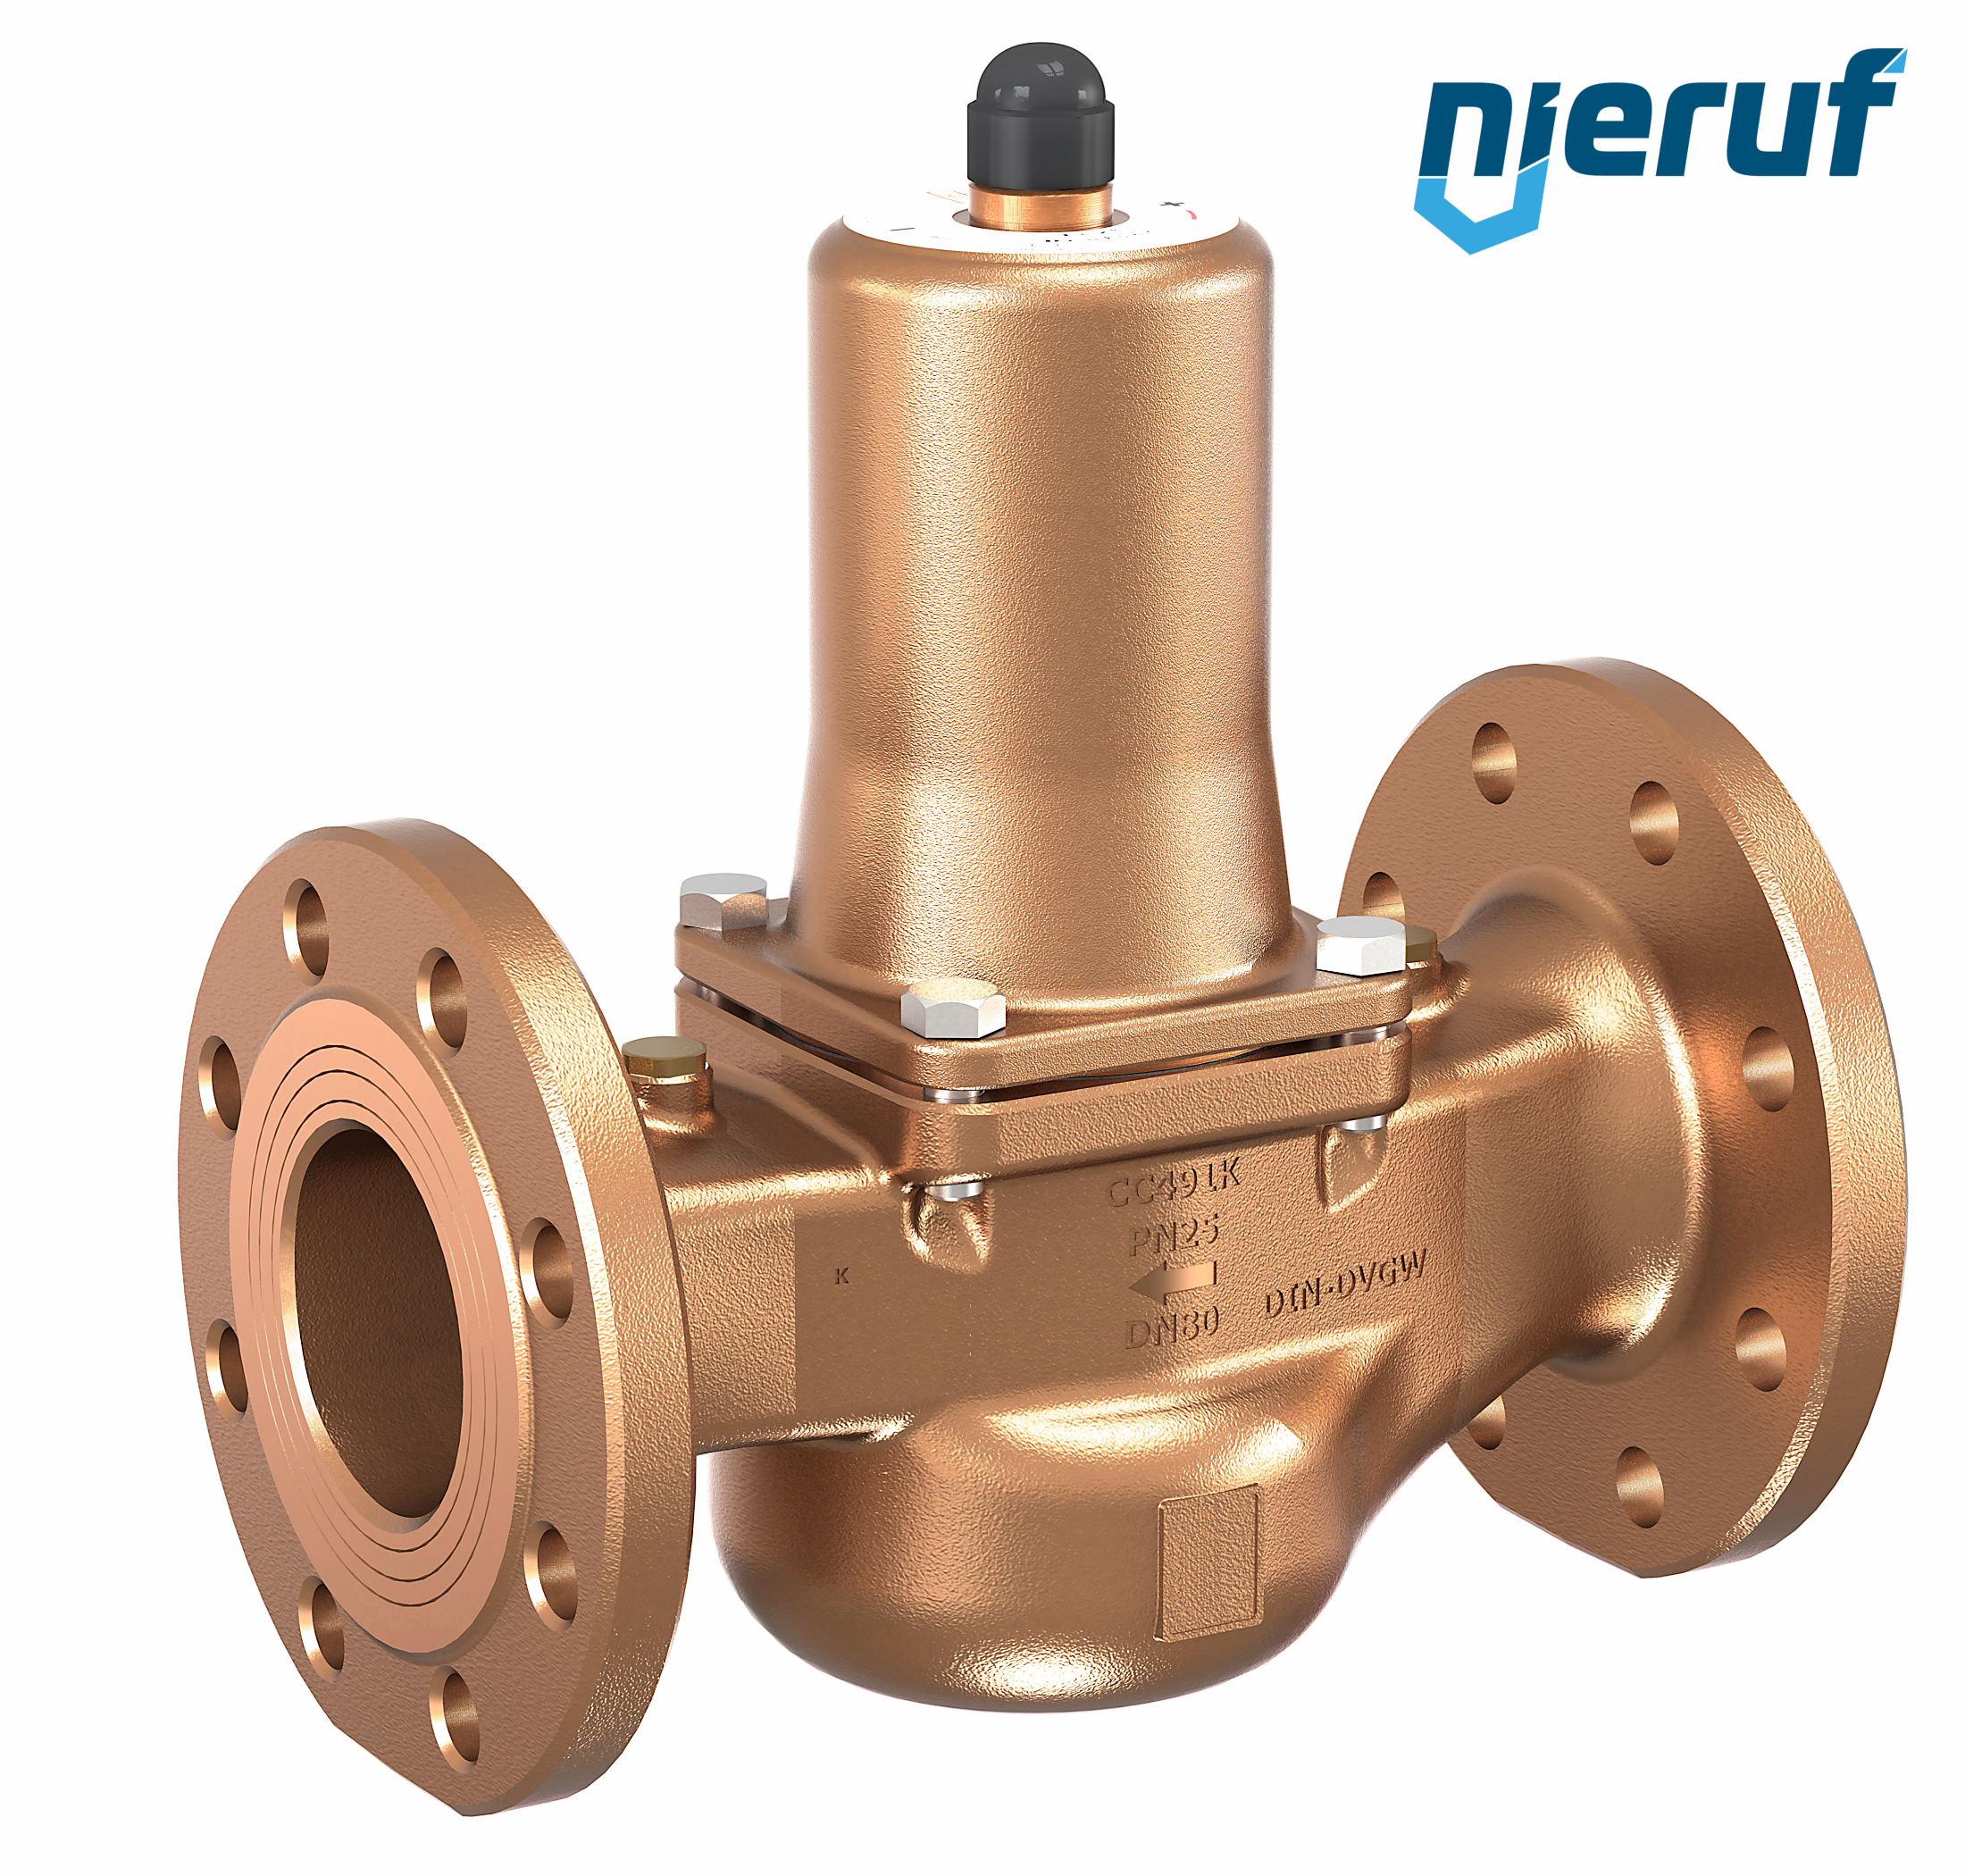 flange overflow valve DN 32 PN40 UV10 gunmetal/brass 0,5 - 2,0 bar